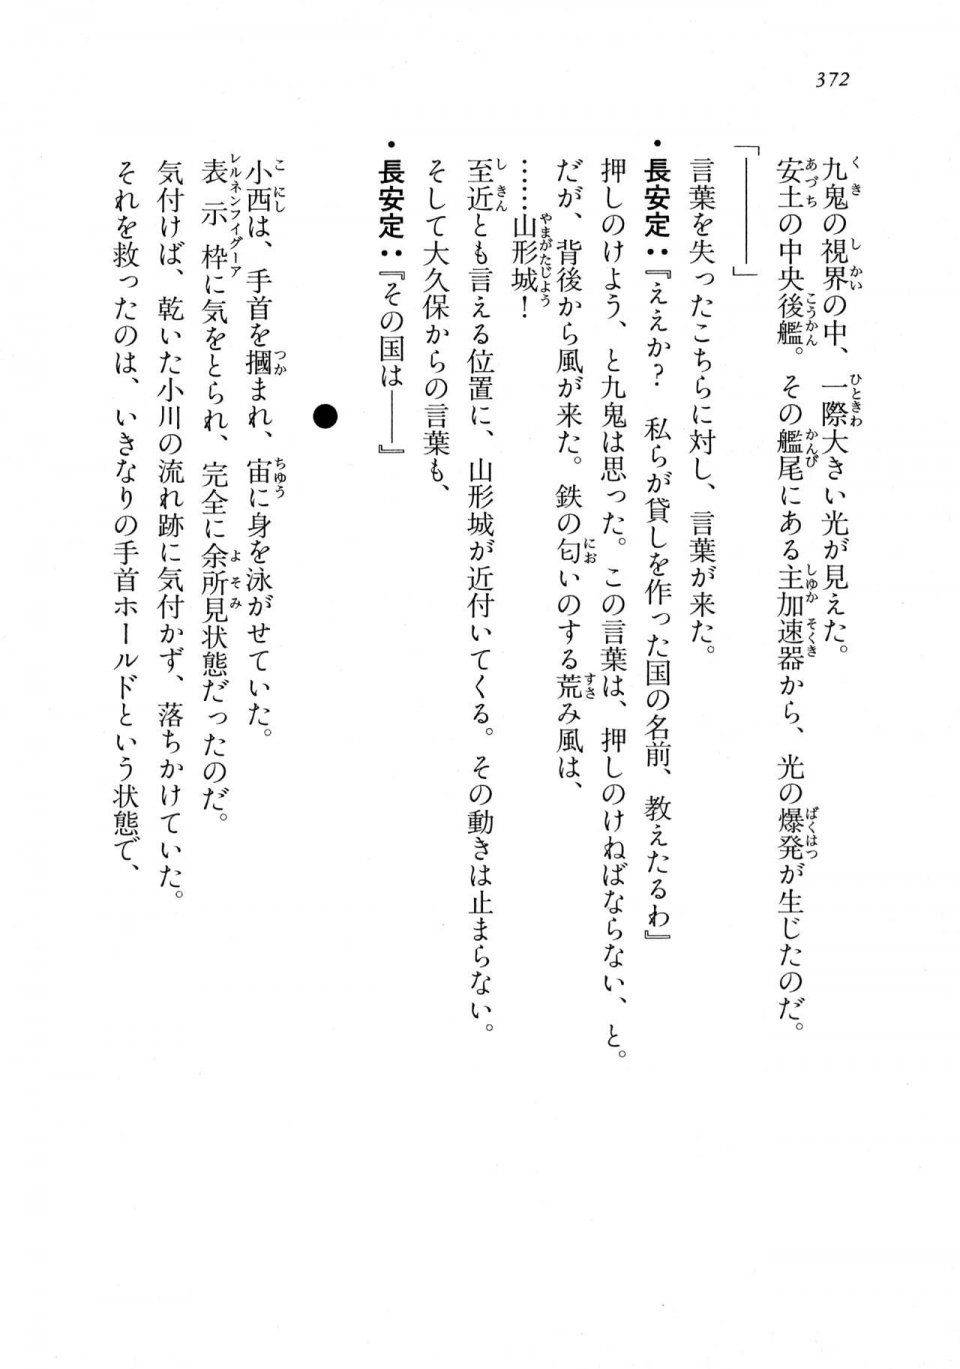 Kyoukai Senjou no Horizon LN Vol 18(7C) Part 1 - Photo #372